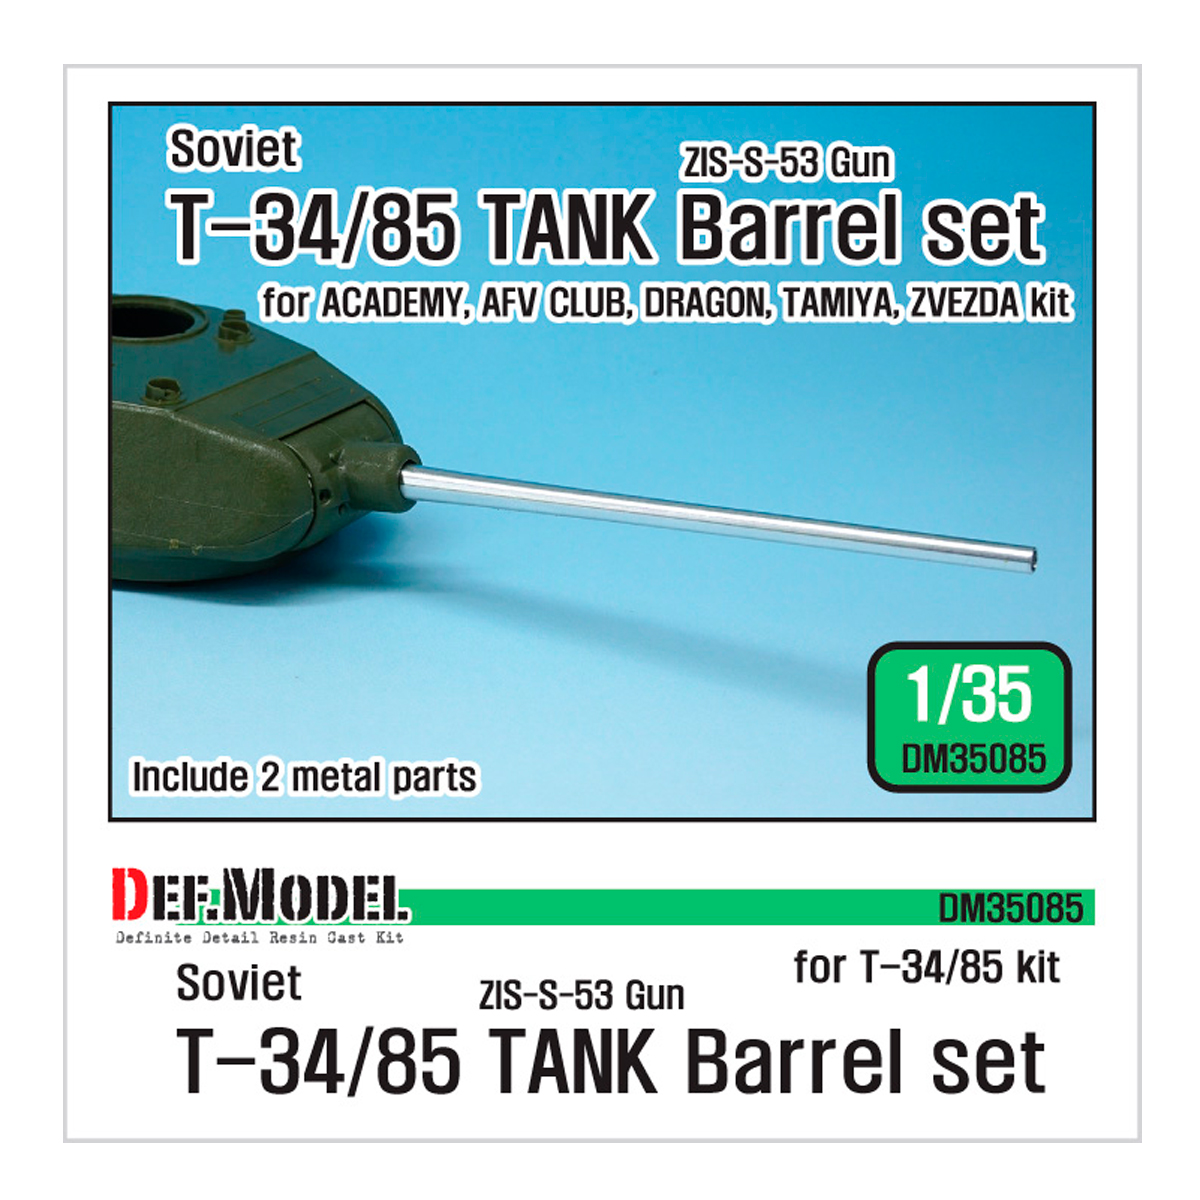 Soviet T-34/85 Tank Barrel set (for 1/35 T-34/85 kit)